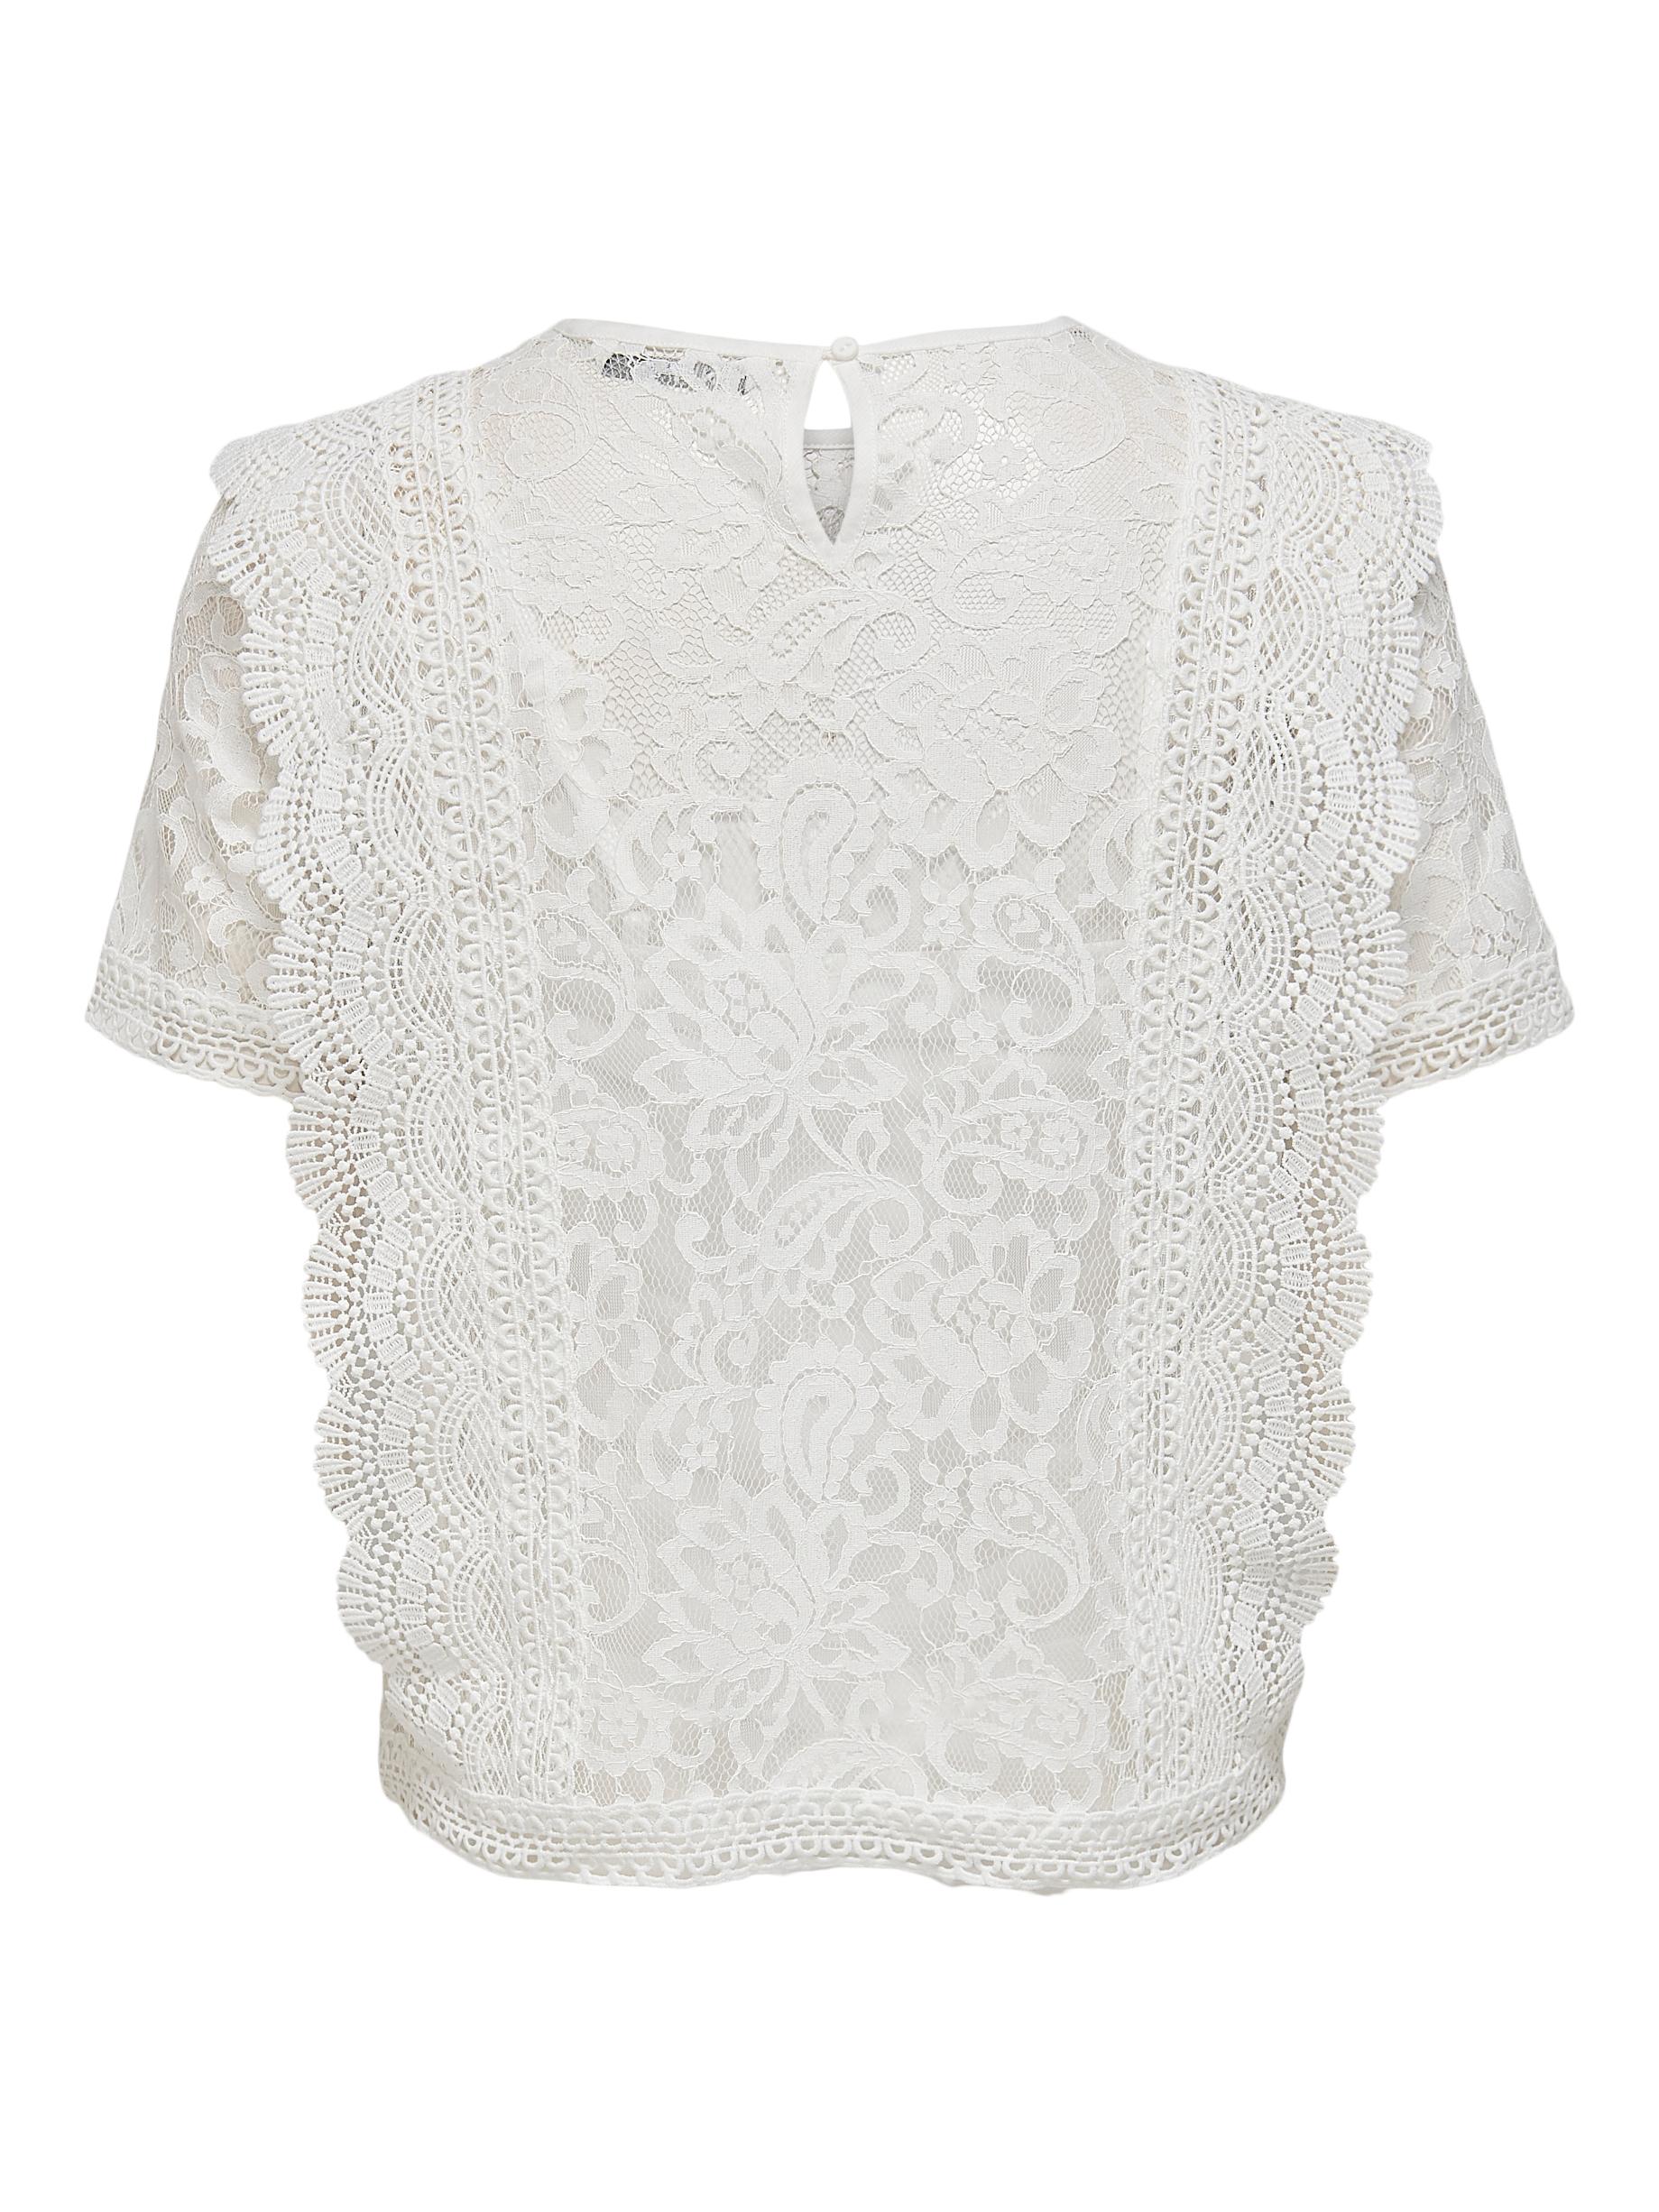 Lona lace overlay blouse, CLOUD DANCER, large